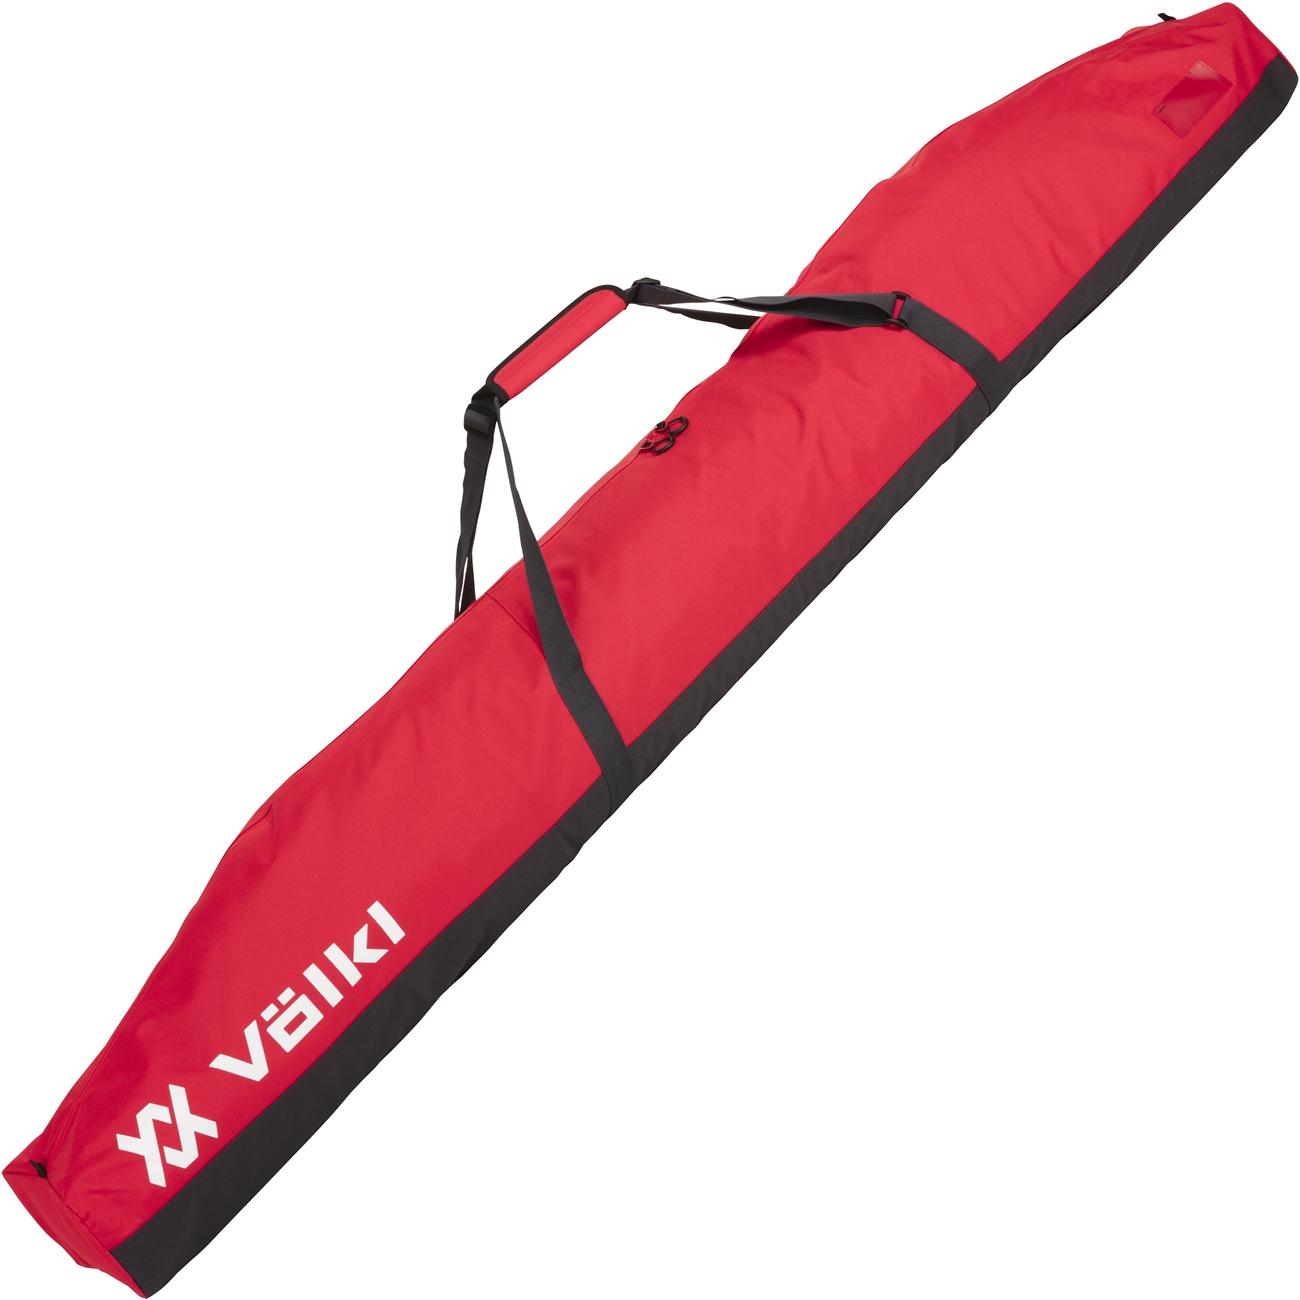 Völkl Race Single Ski Bag 175 cm